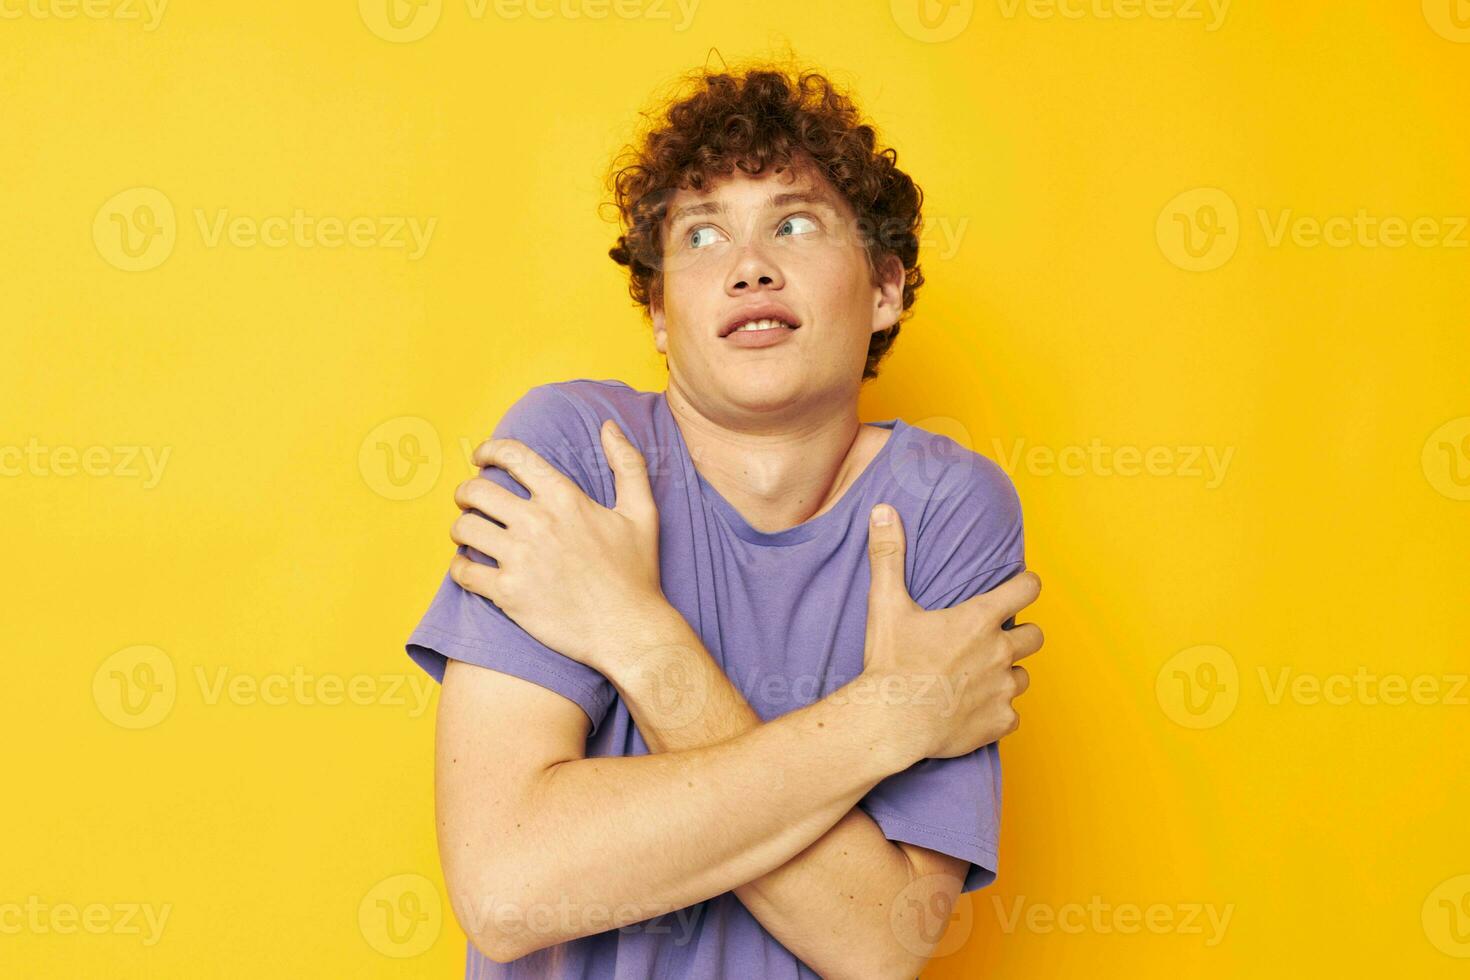 chico con Rizado pelo en púrpura camisetas estudio amarillo antecedentes foto